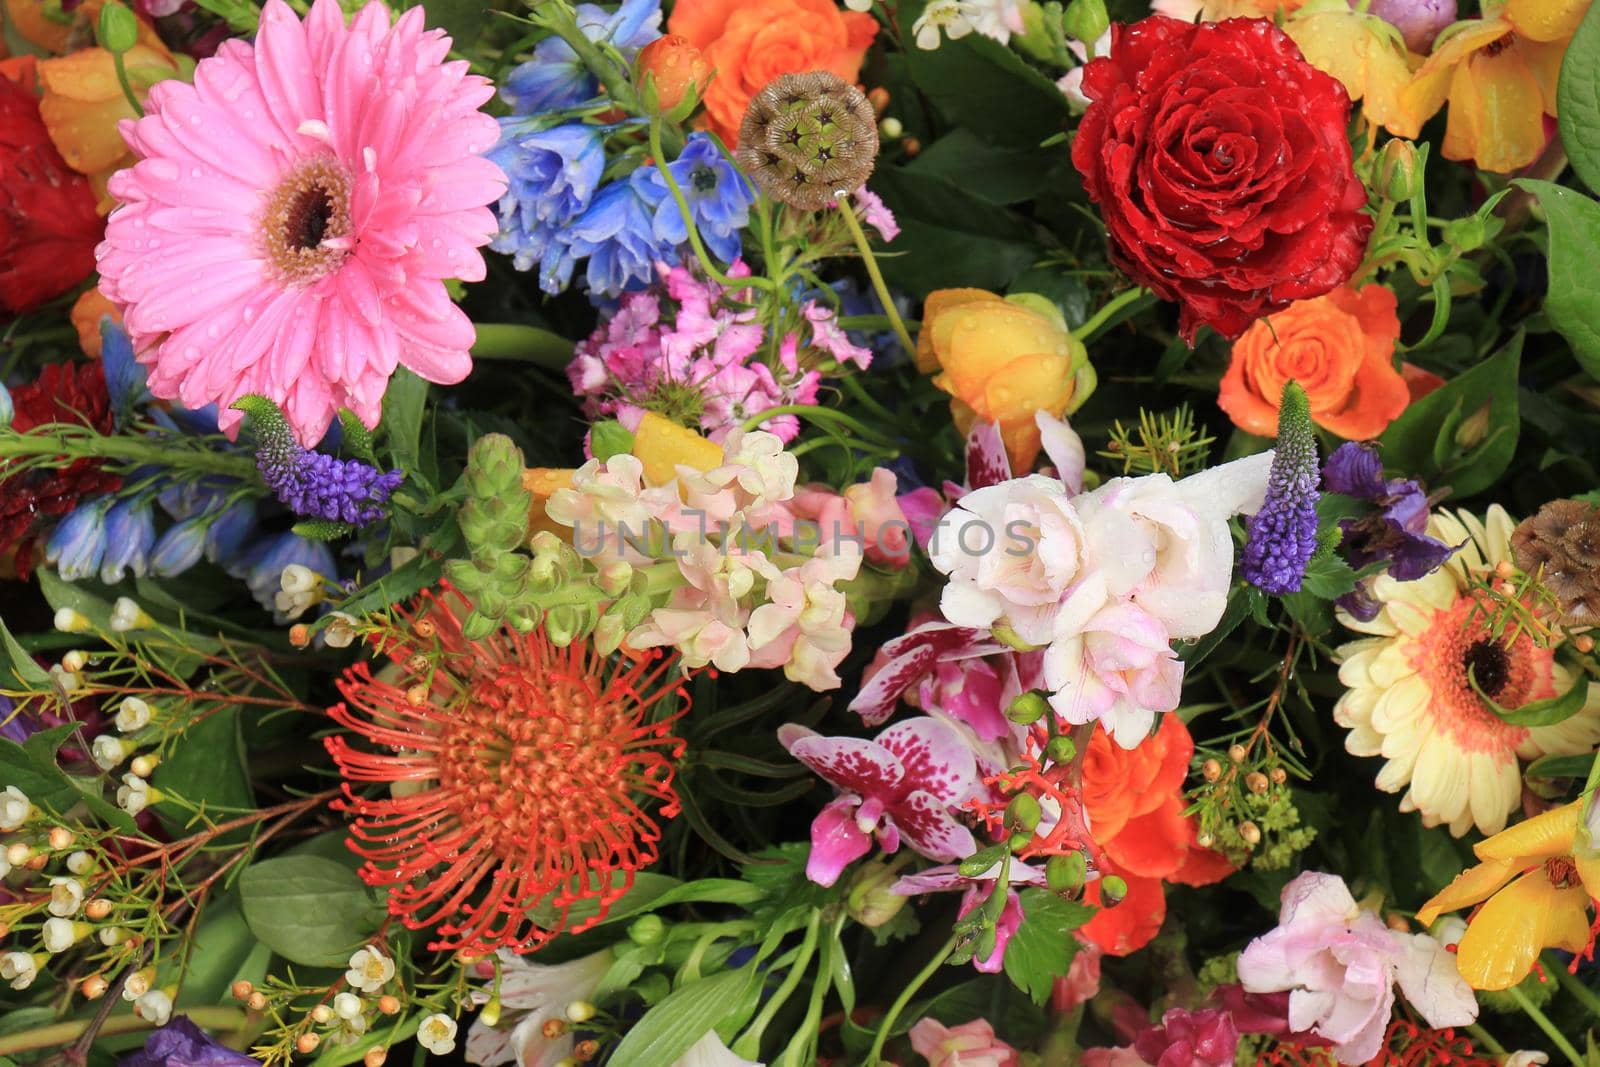 Multi colored wedding flowers in a decorative arrangement